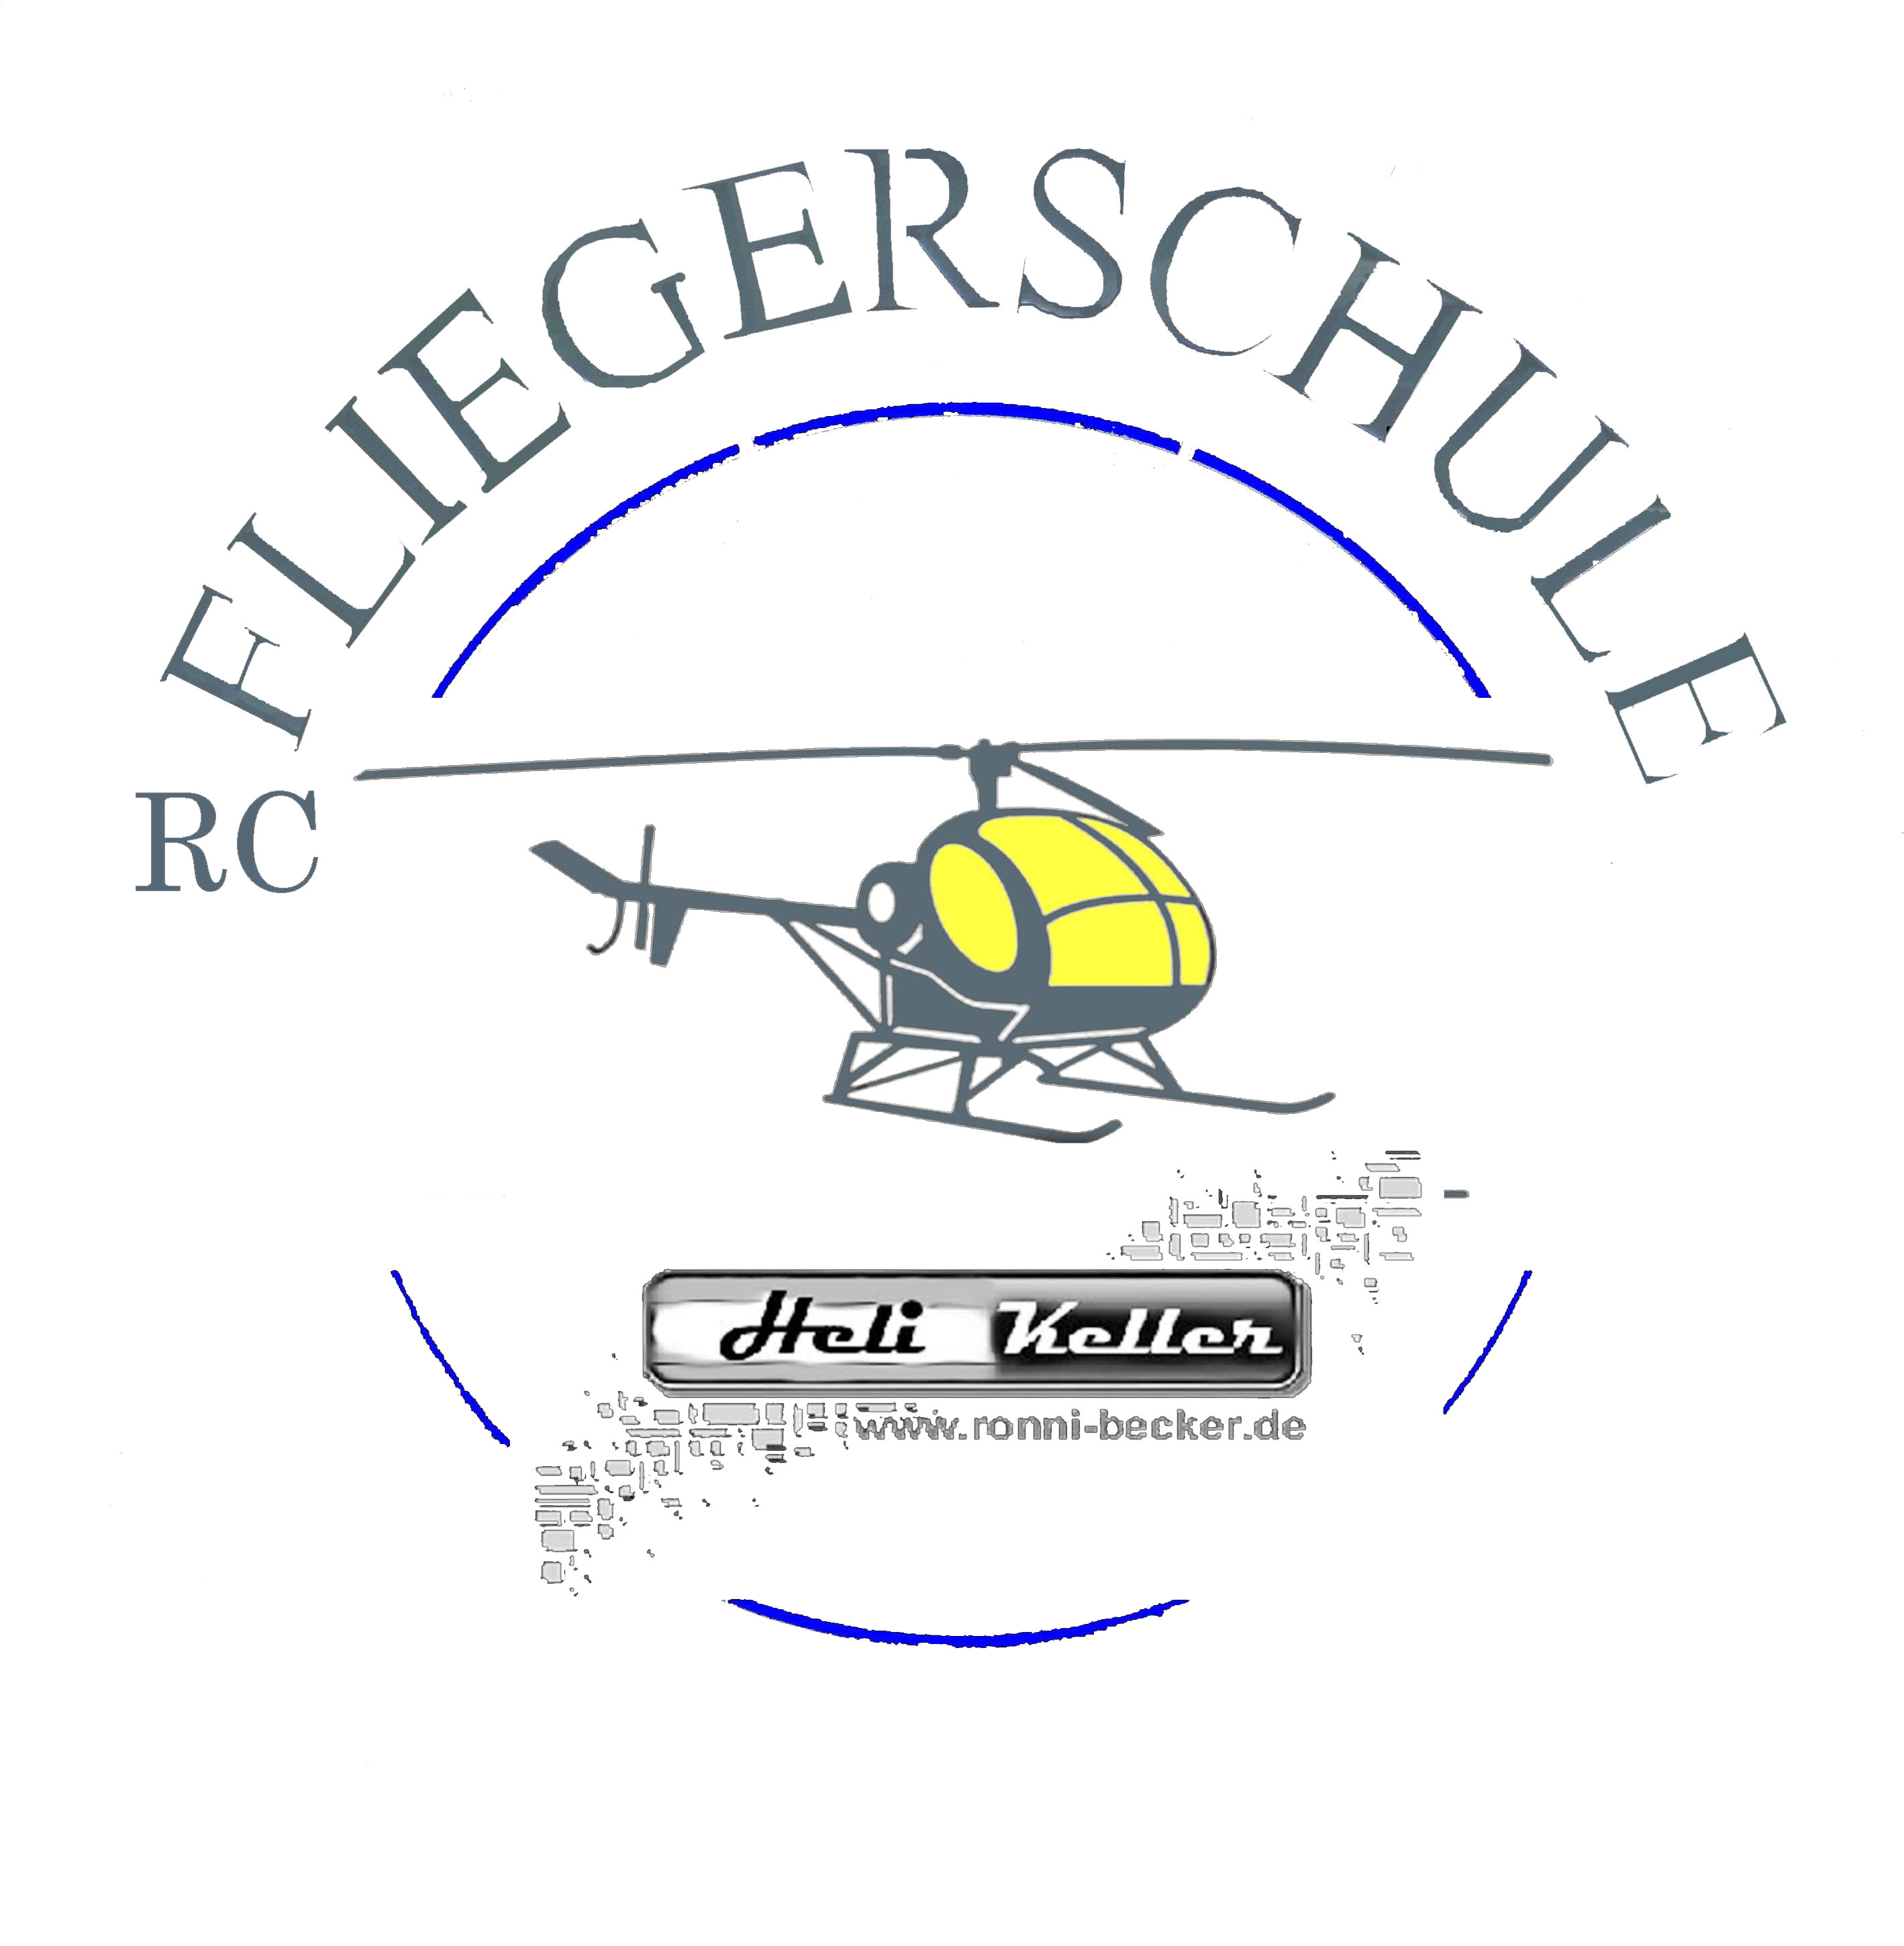 Flugschule www.ronni-becker.de